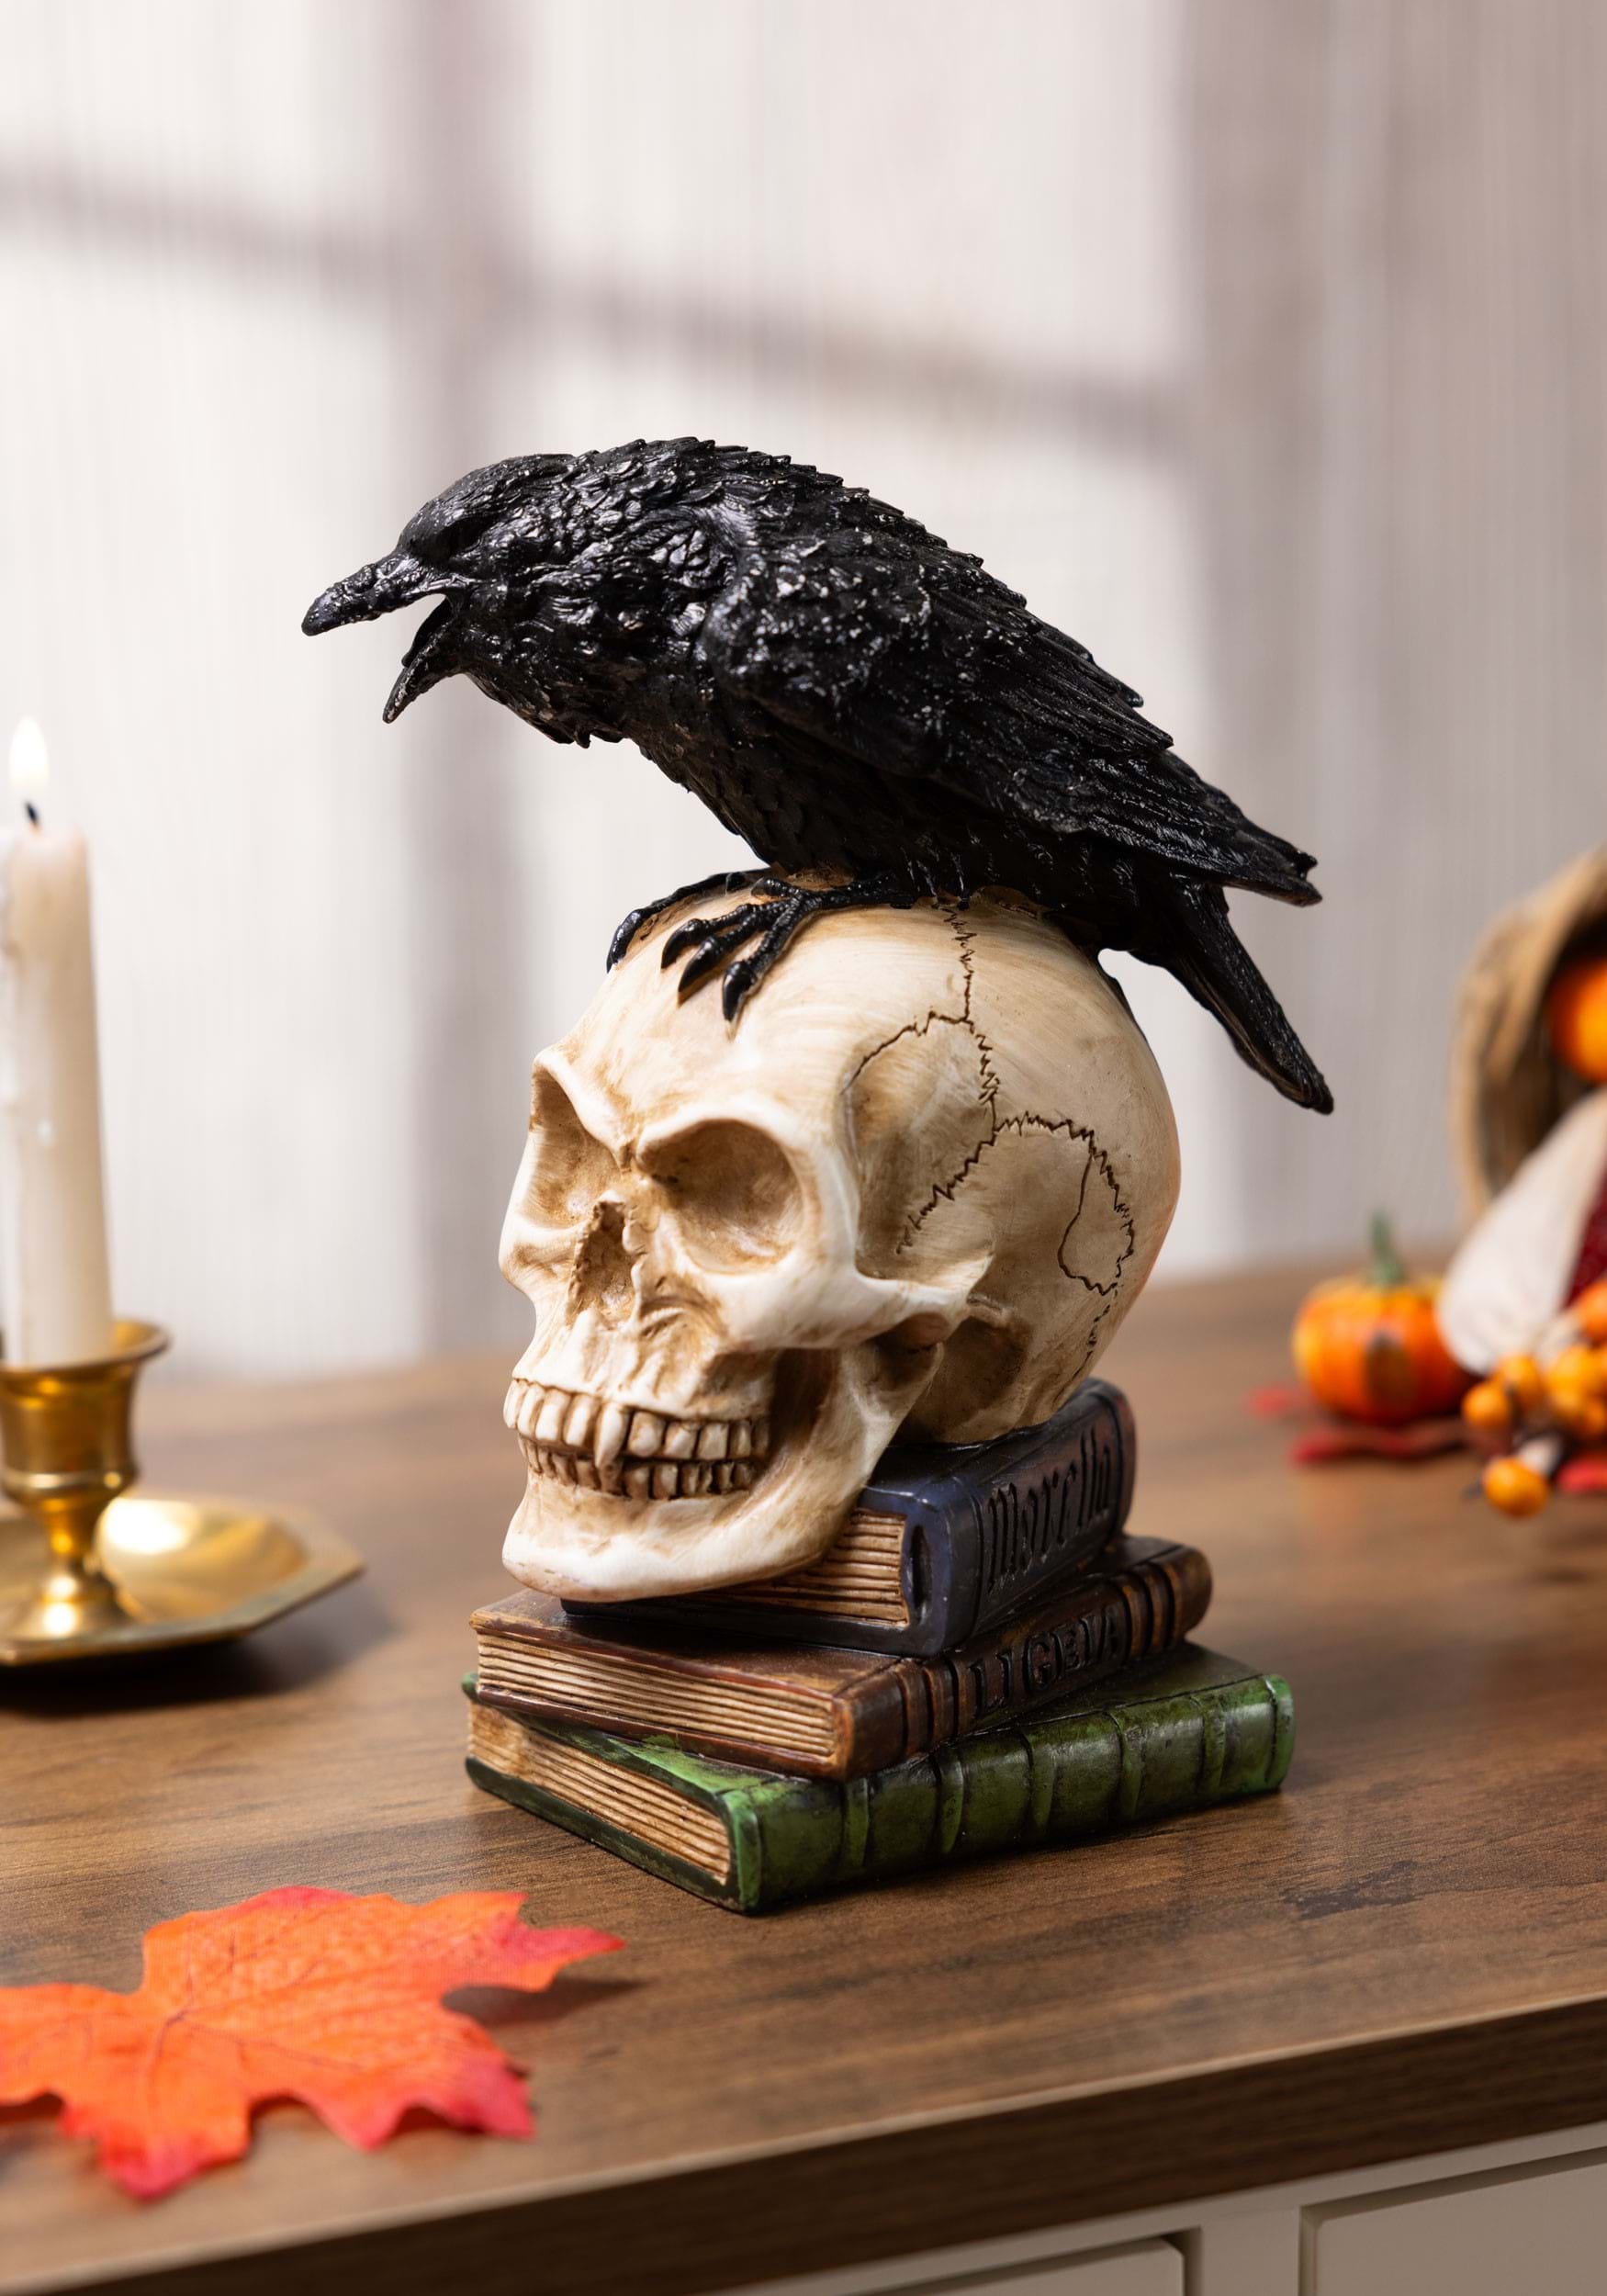 Skull Candle Holder Skull Tea Light Candle Holder Skull Home Decor Gothic  Home Decor Skull Candle 